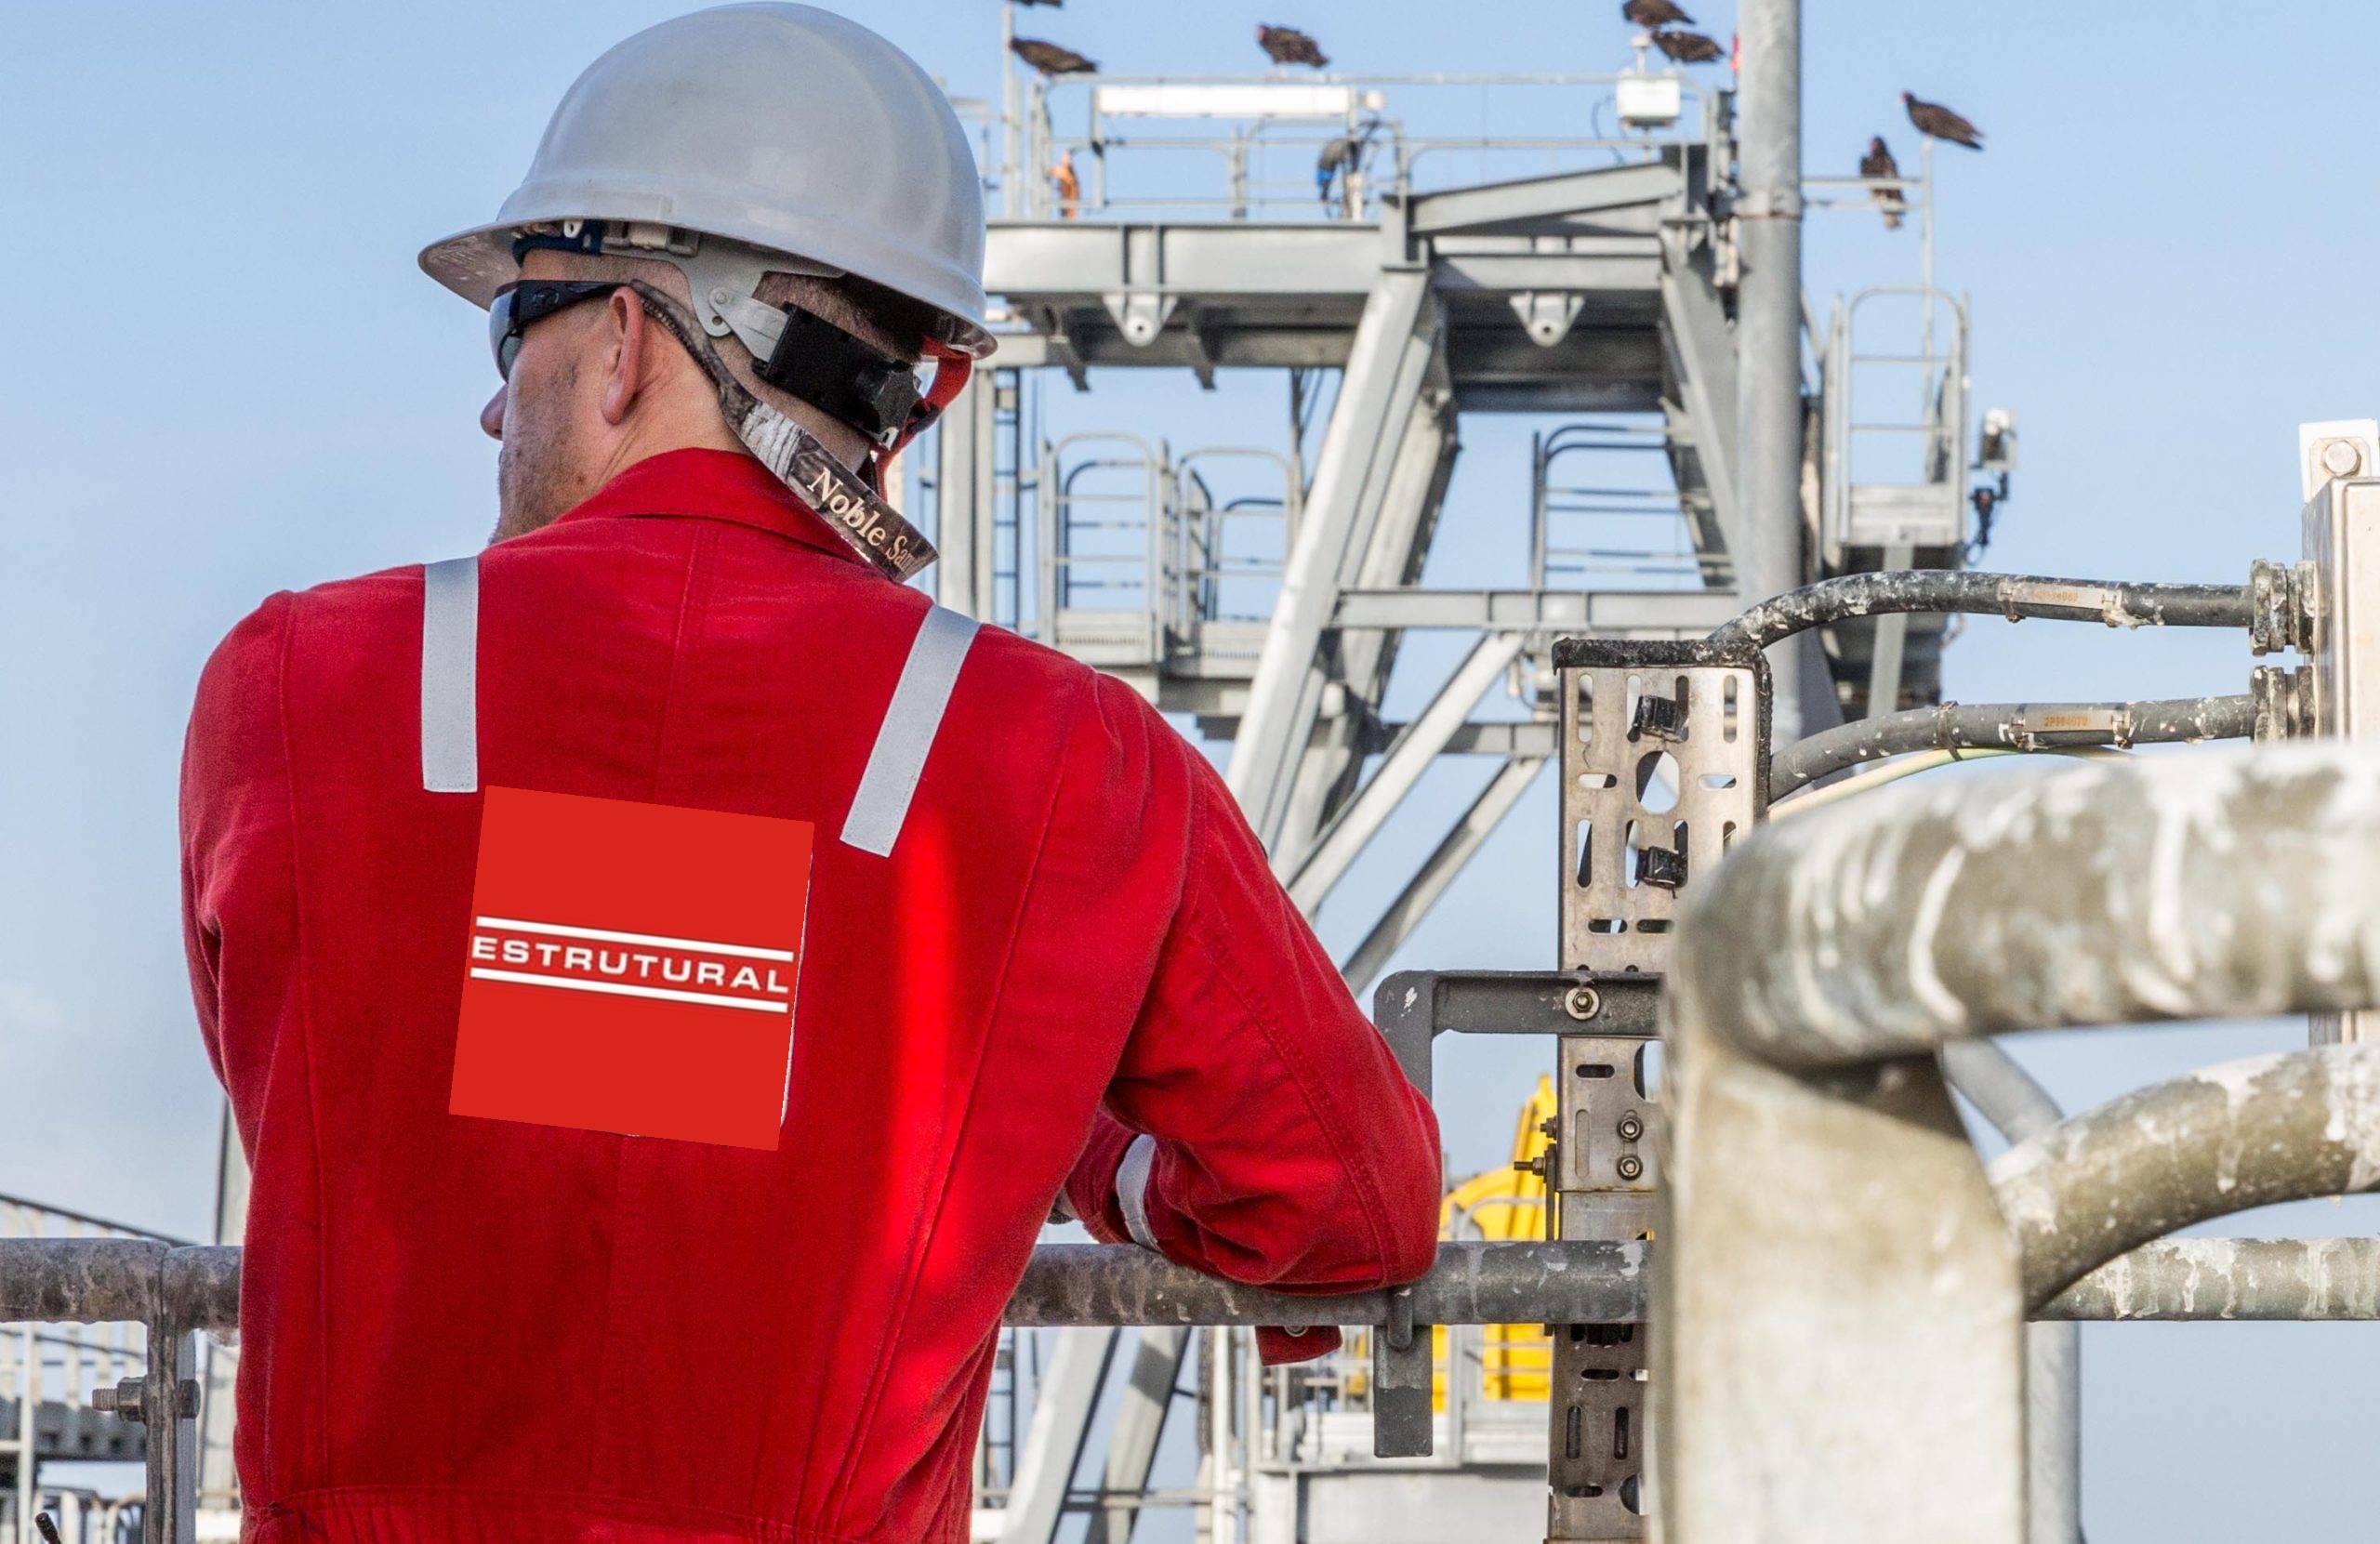 Offshore Macaé Petrobras Structural Services Industrial Services Platforms